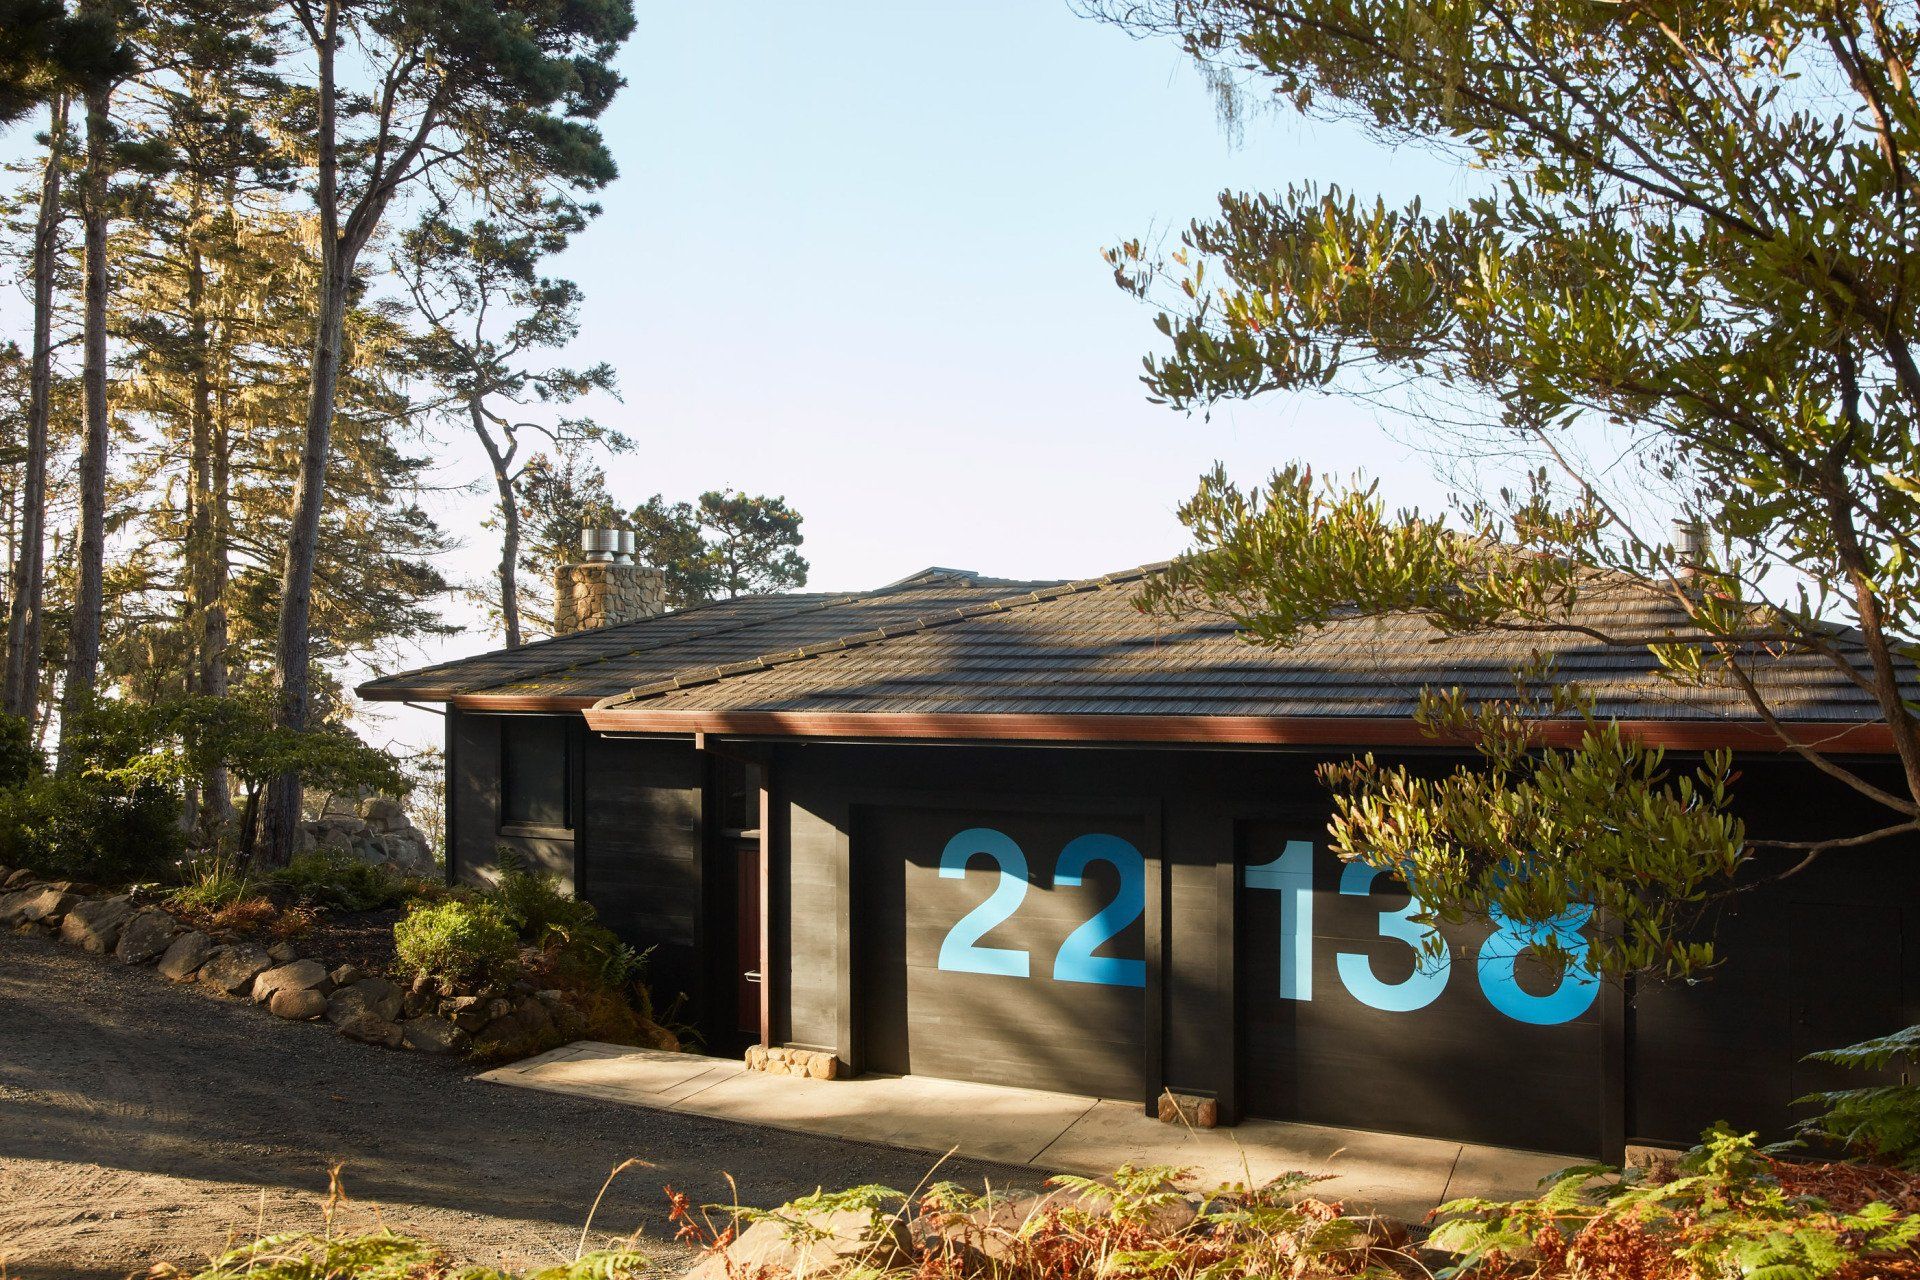 Home in Northern California designed by Dakota DesignWorks